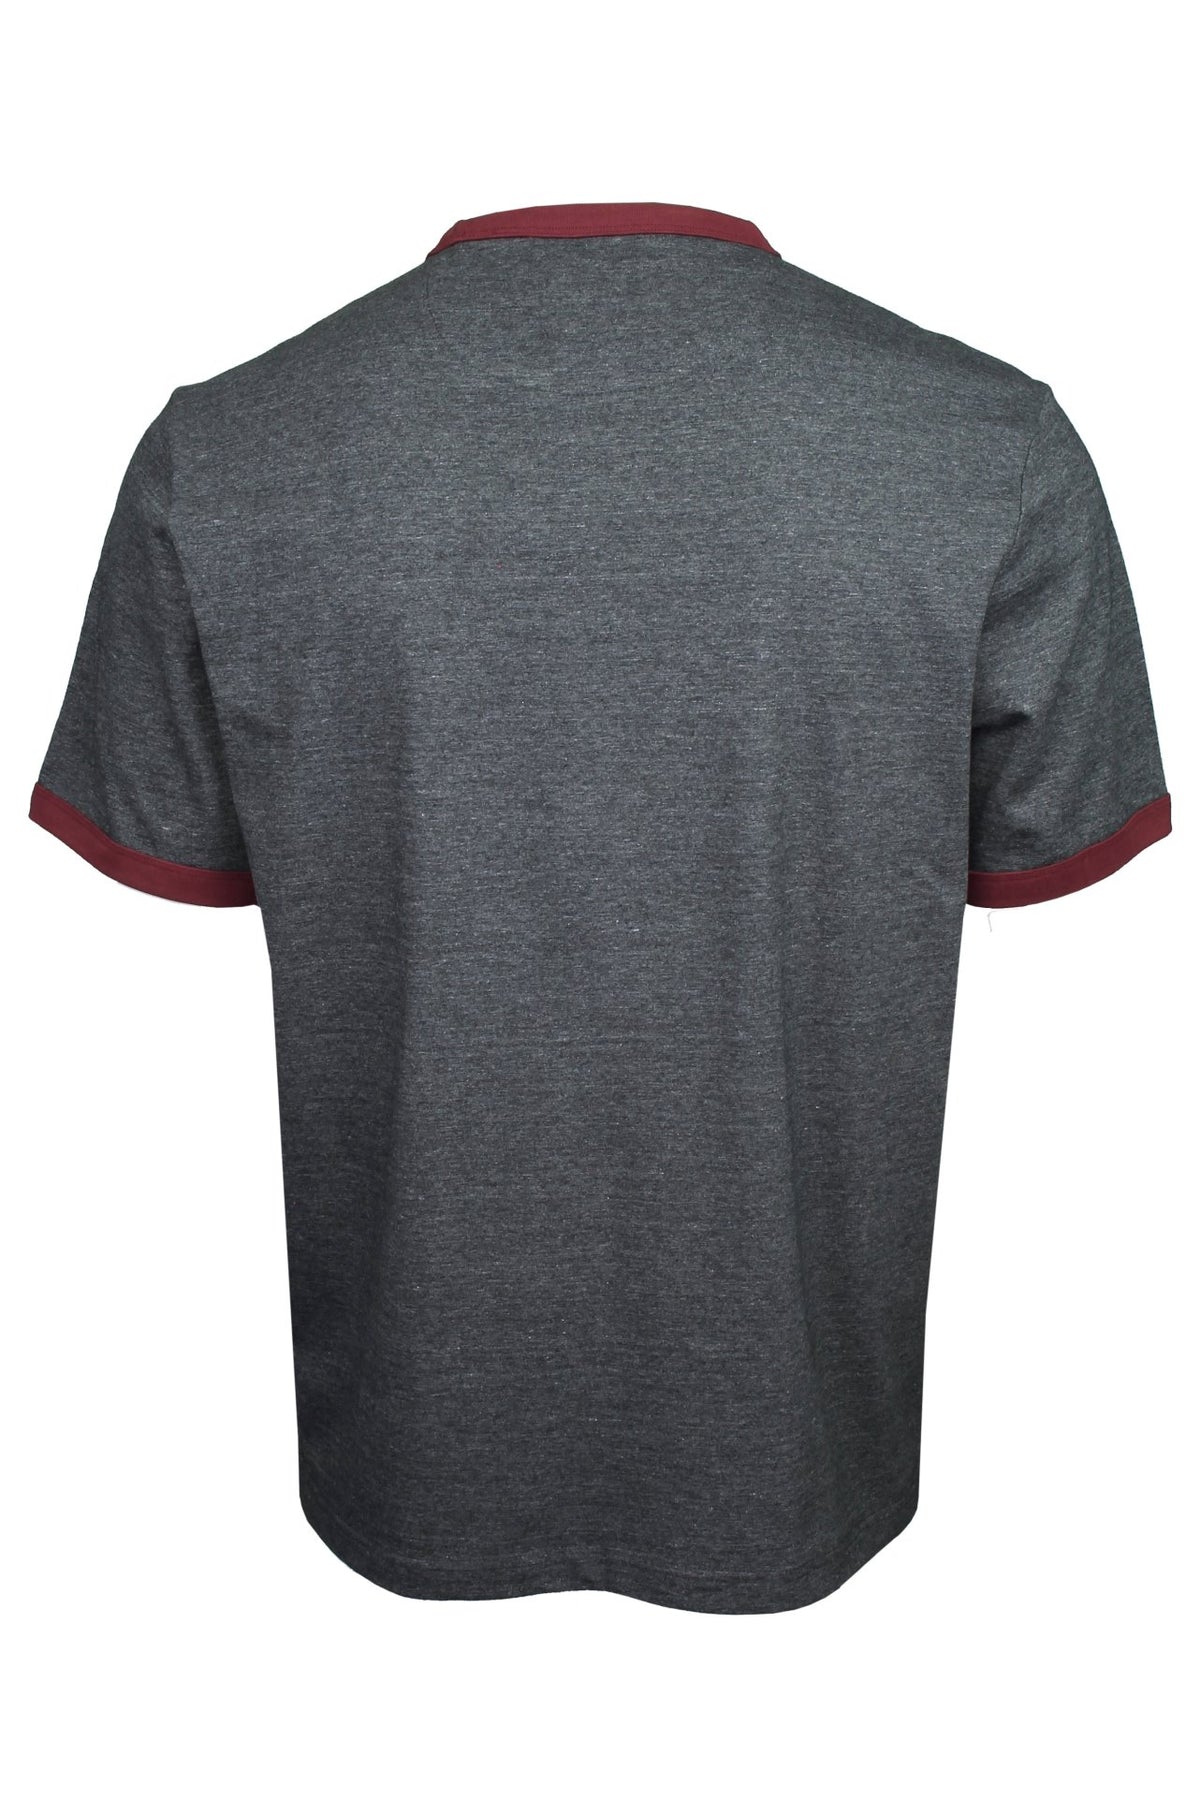 Farah Mens Ringer Short Sleeve T-Shirt, 03, F4Kfd041, Farah Grey Marl